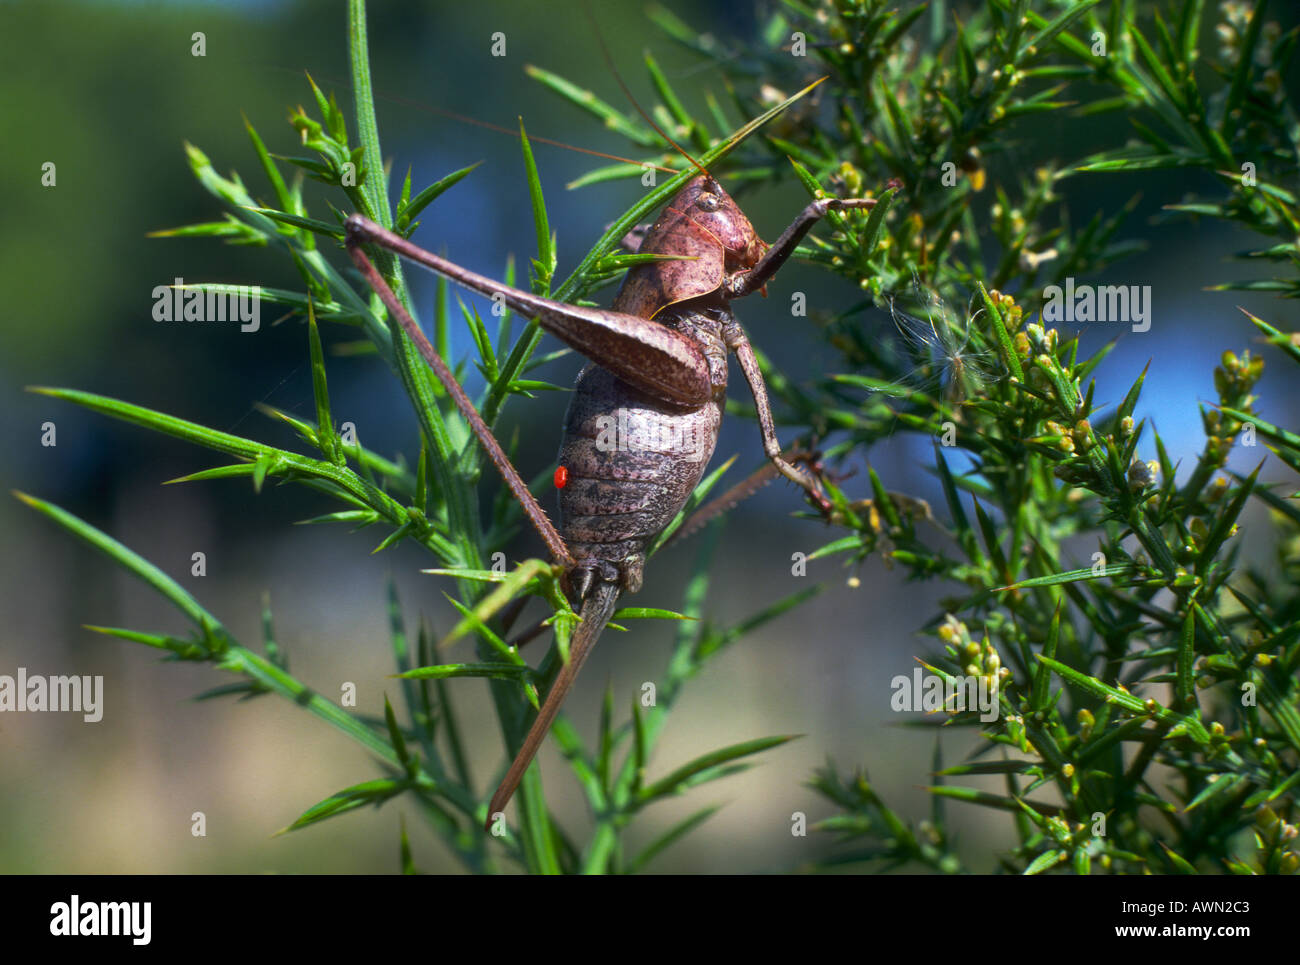 Bush-cricket, Family Tettigoniidae. Female on shrub Stock Photo